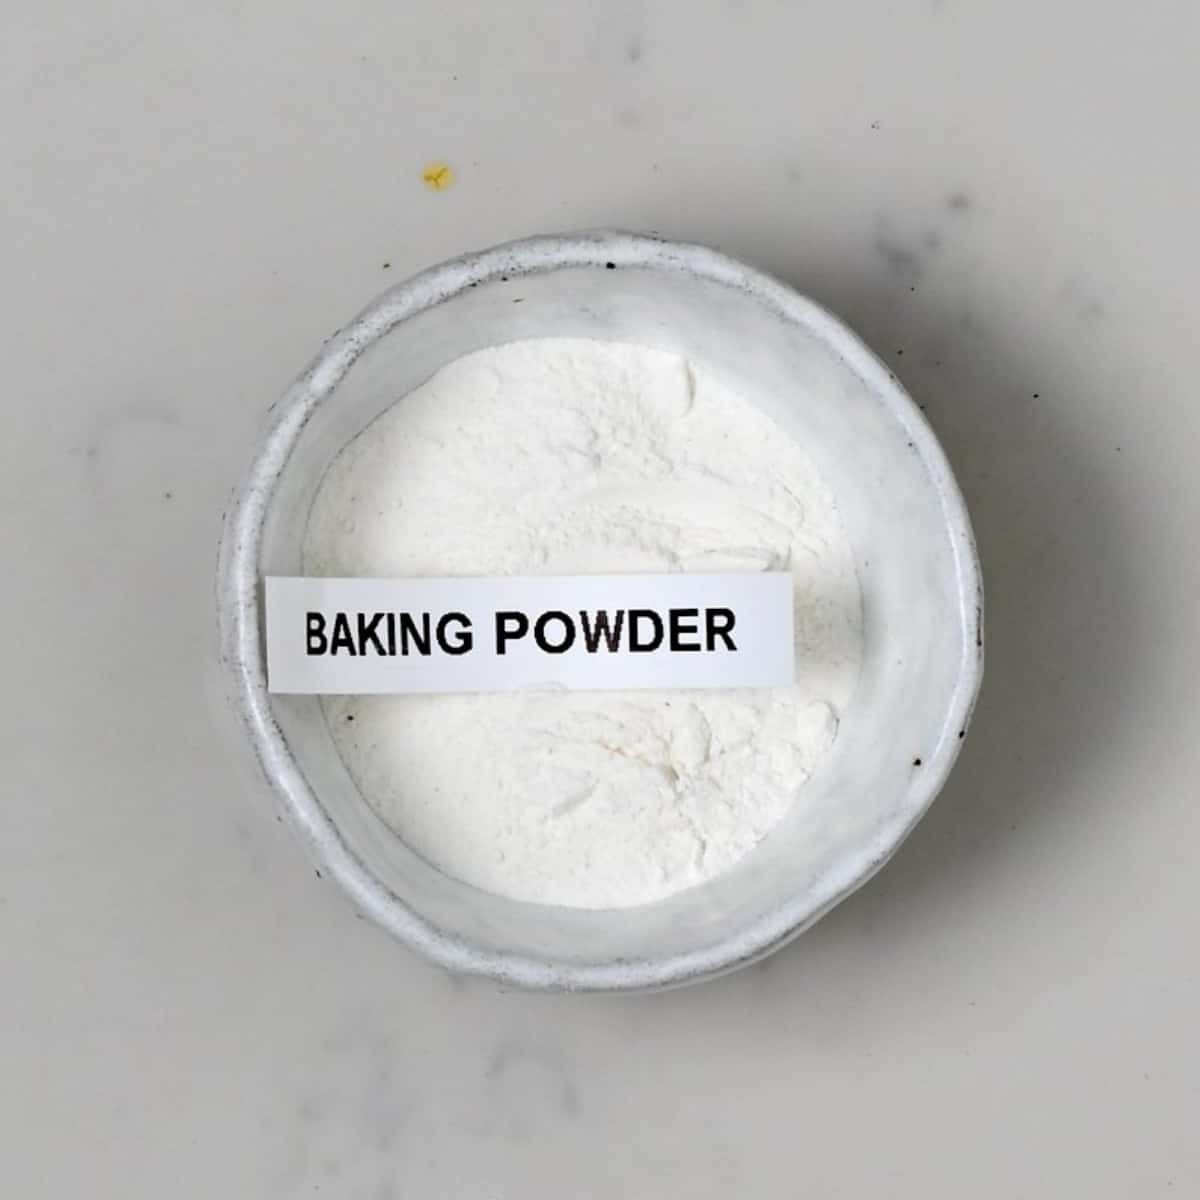 What Is Baking Powder?